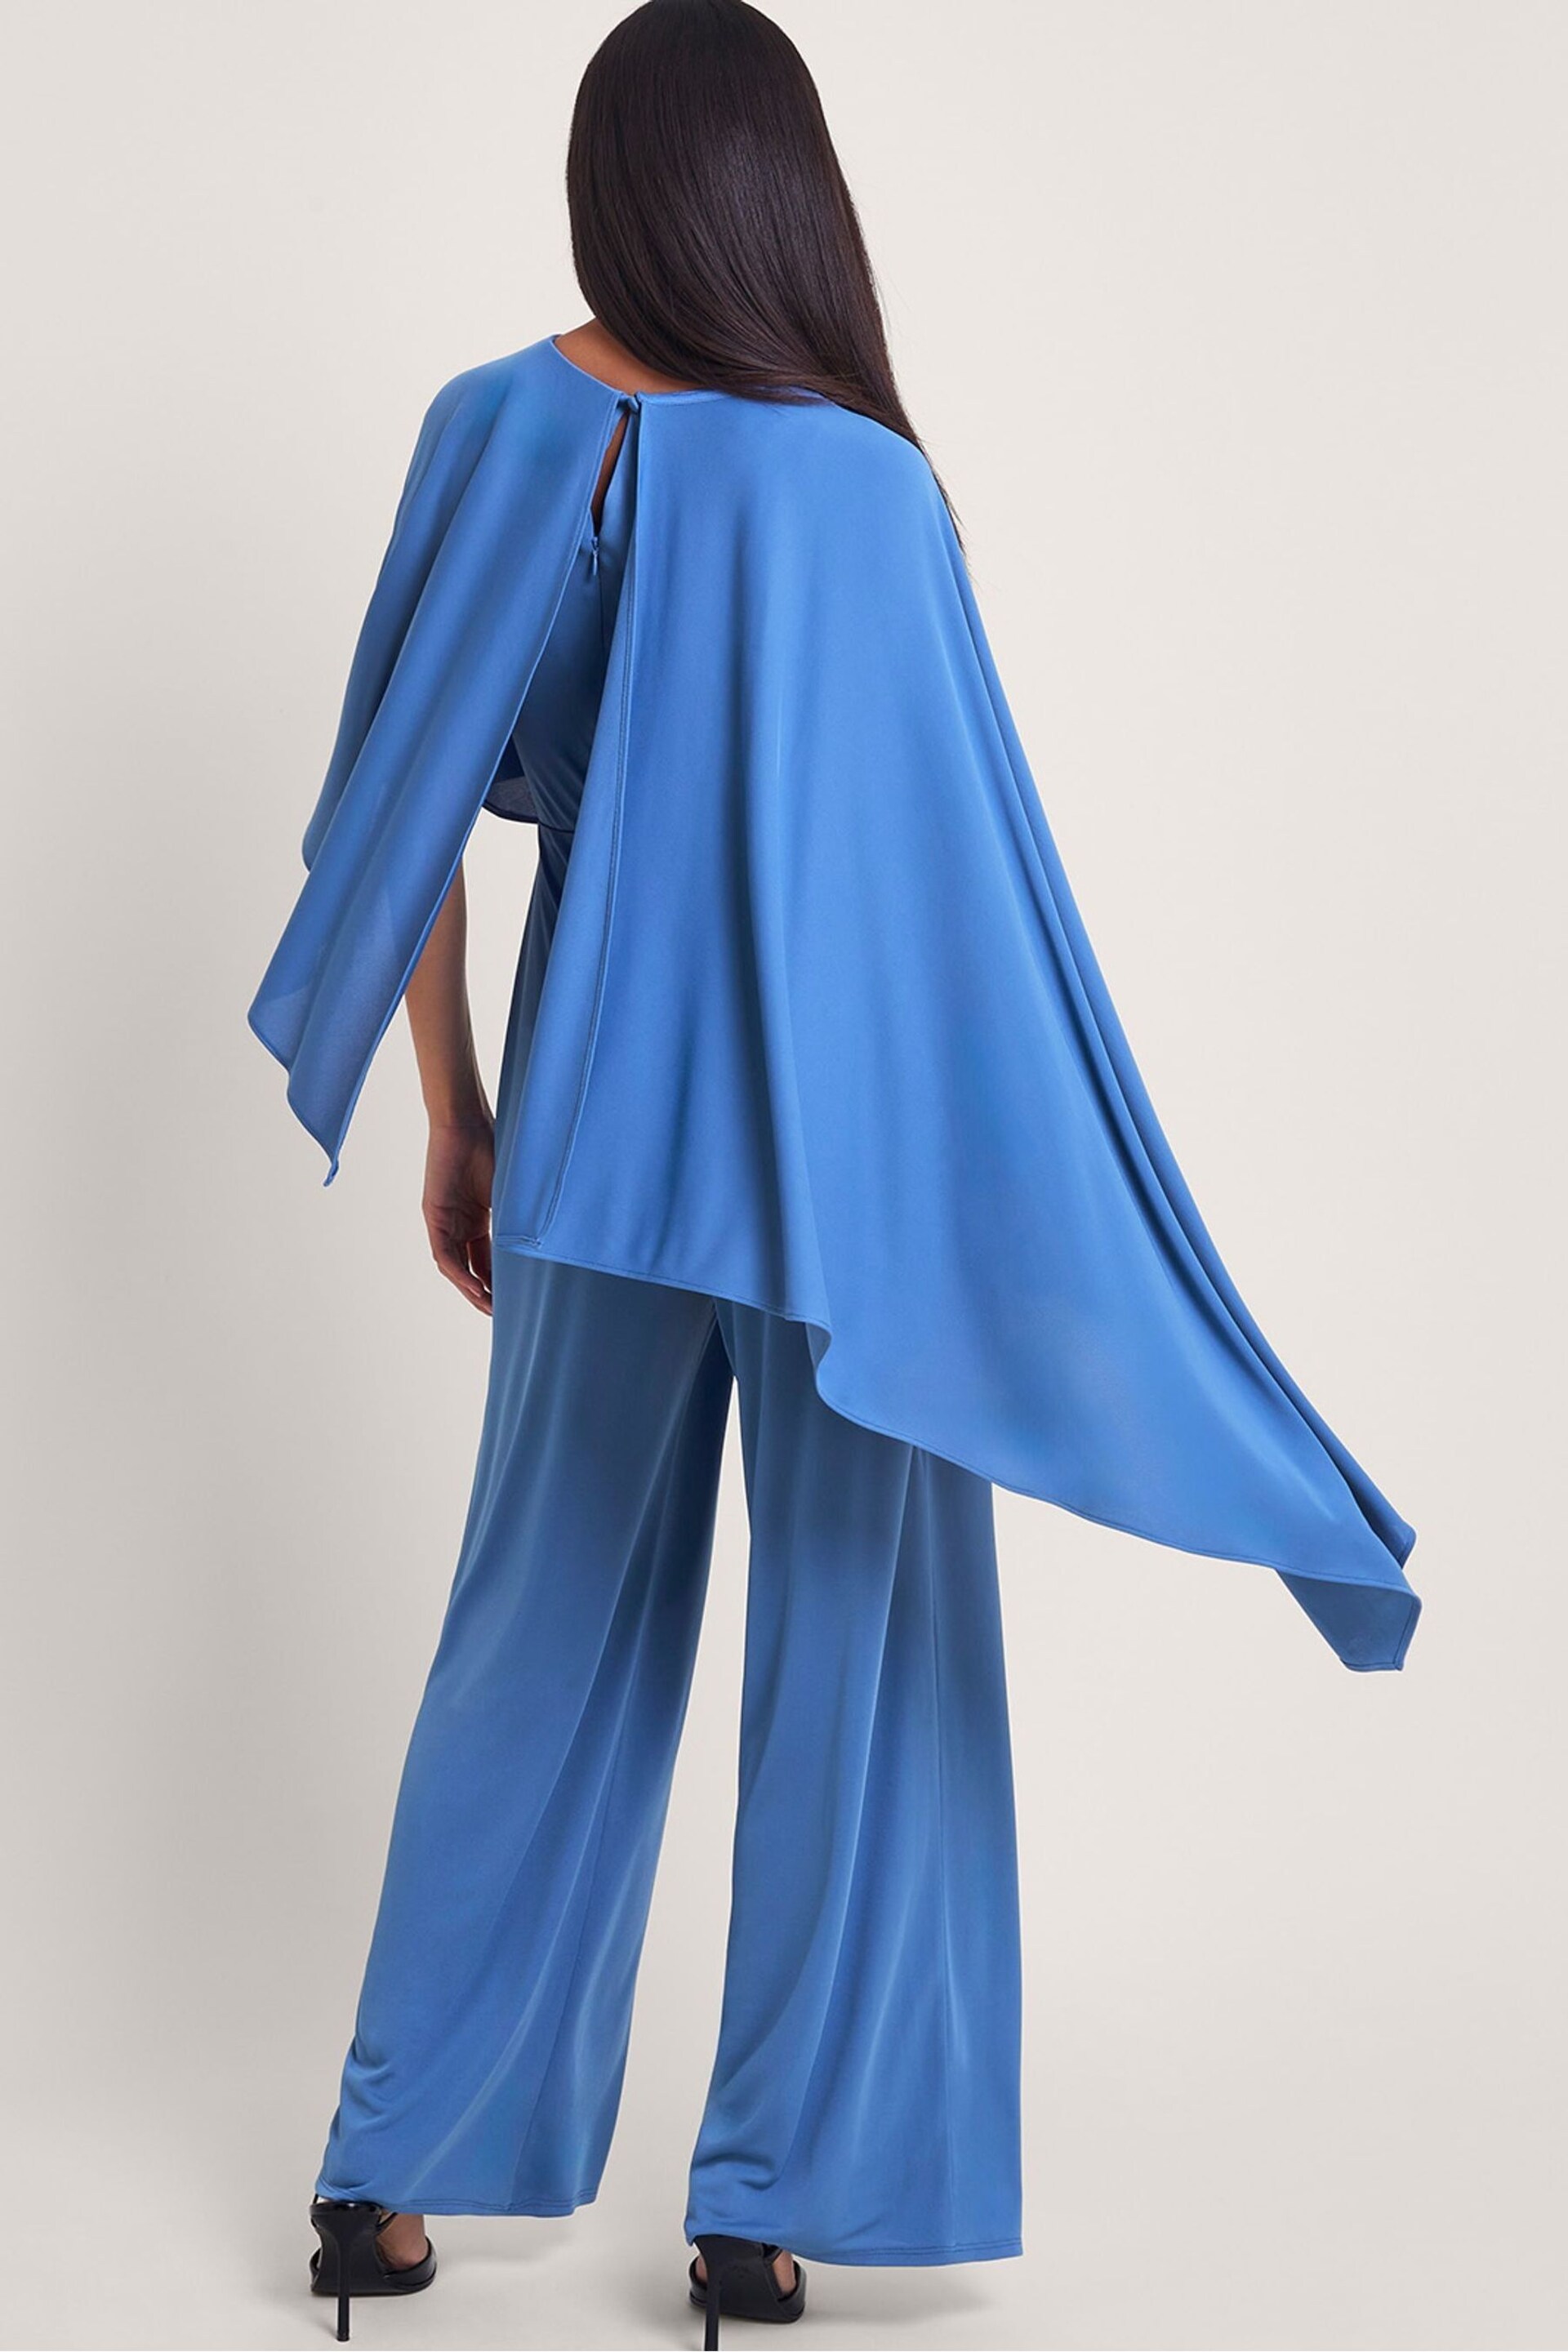 Monsoon Blue Delia Drape Jumpsuit - Image 3 of 5